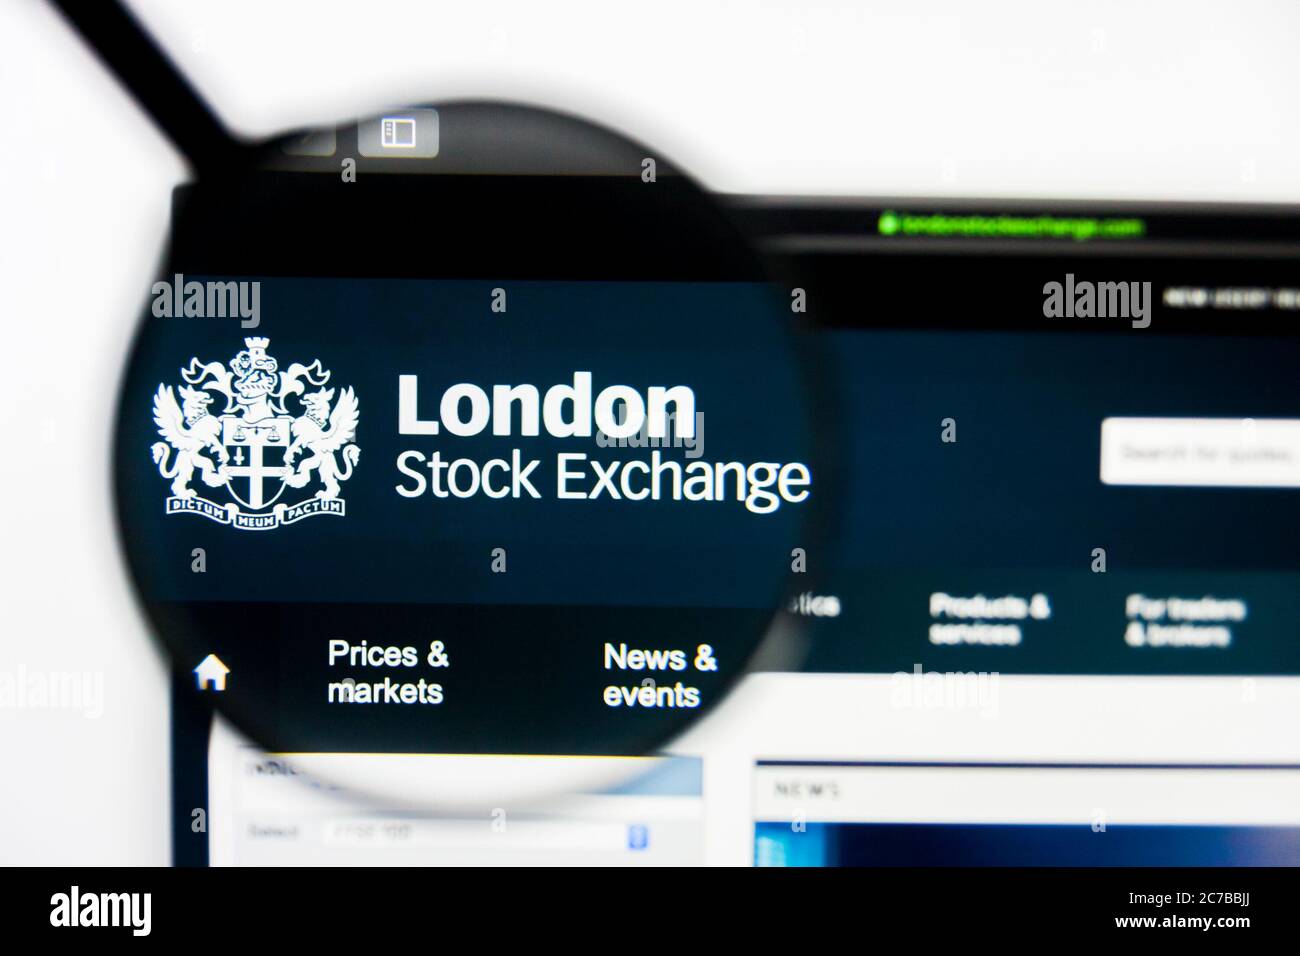 London Stock Exchange homepage